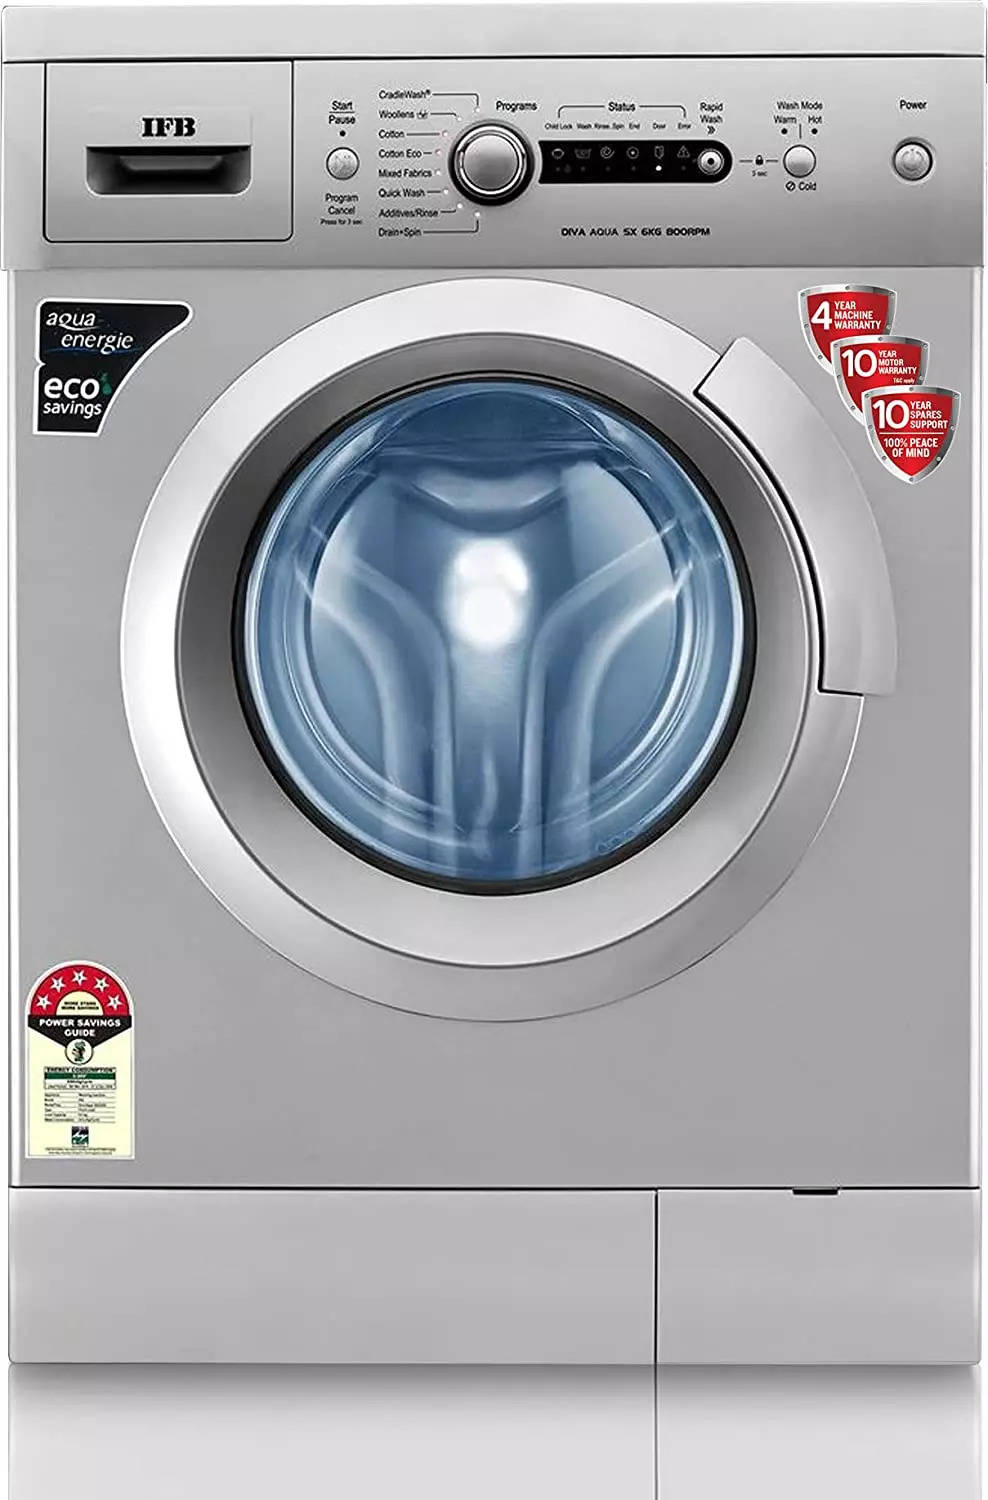 2D Wash Technology